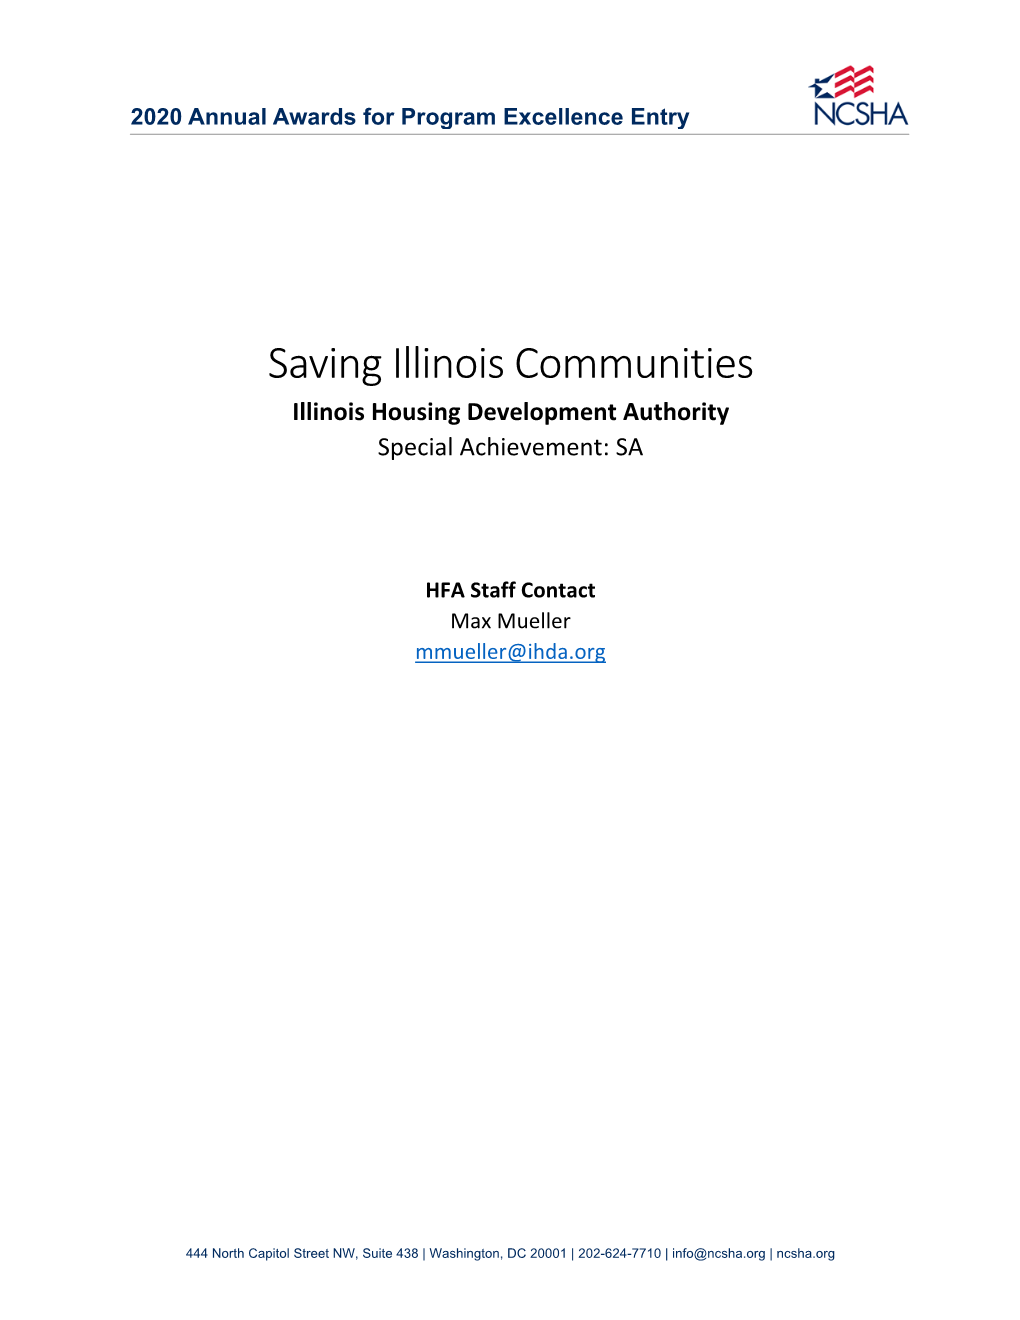 Saving Illinois Communities Illinois Housing Development Authority Special Achievement: SA